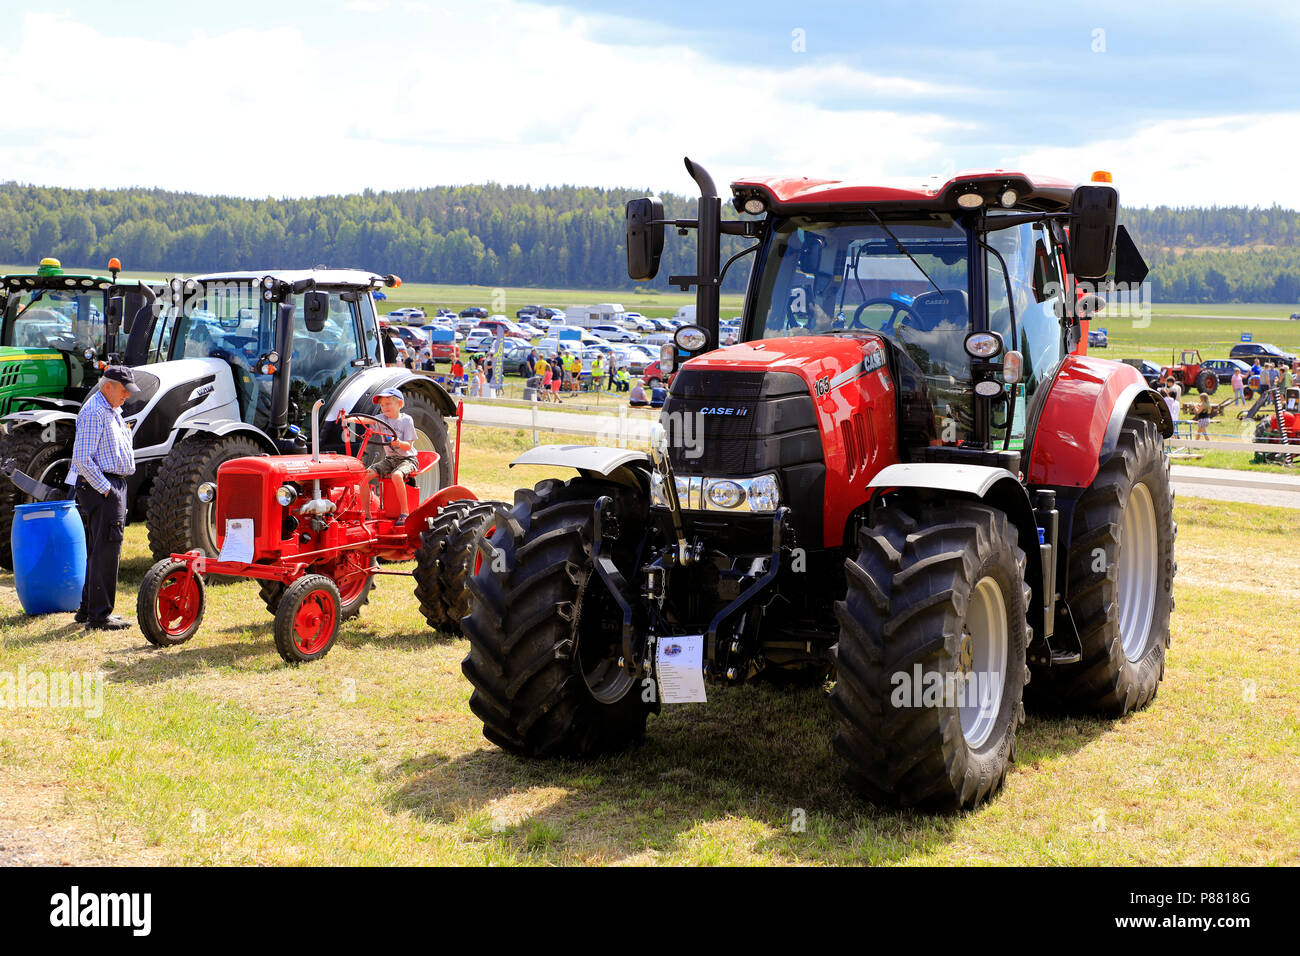 Big Case IH 165 and small Valmet 15 tractors, latter driven by young boy on Kimito Traktorkavalkad, Tractor Cavalcade. Kimito, Finland - July 7, 2018. Stock Photo